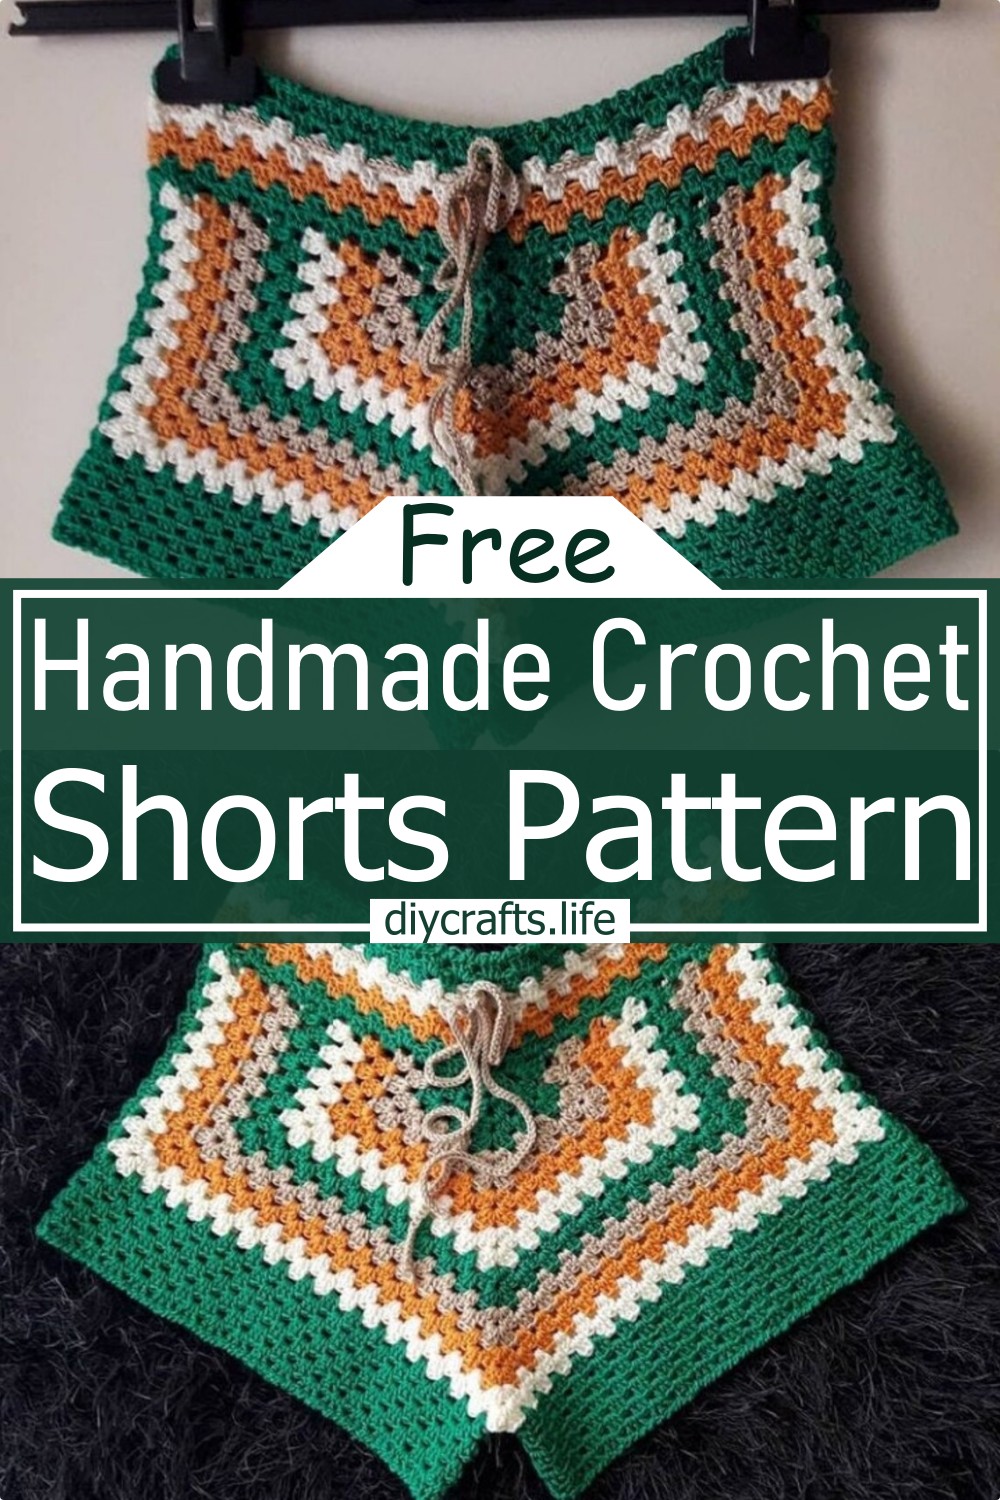 Handmade Crochet Shorts Pattern